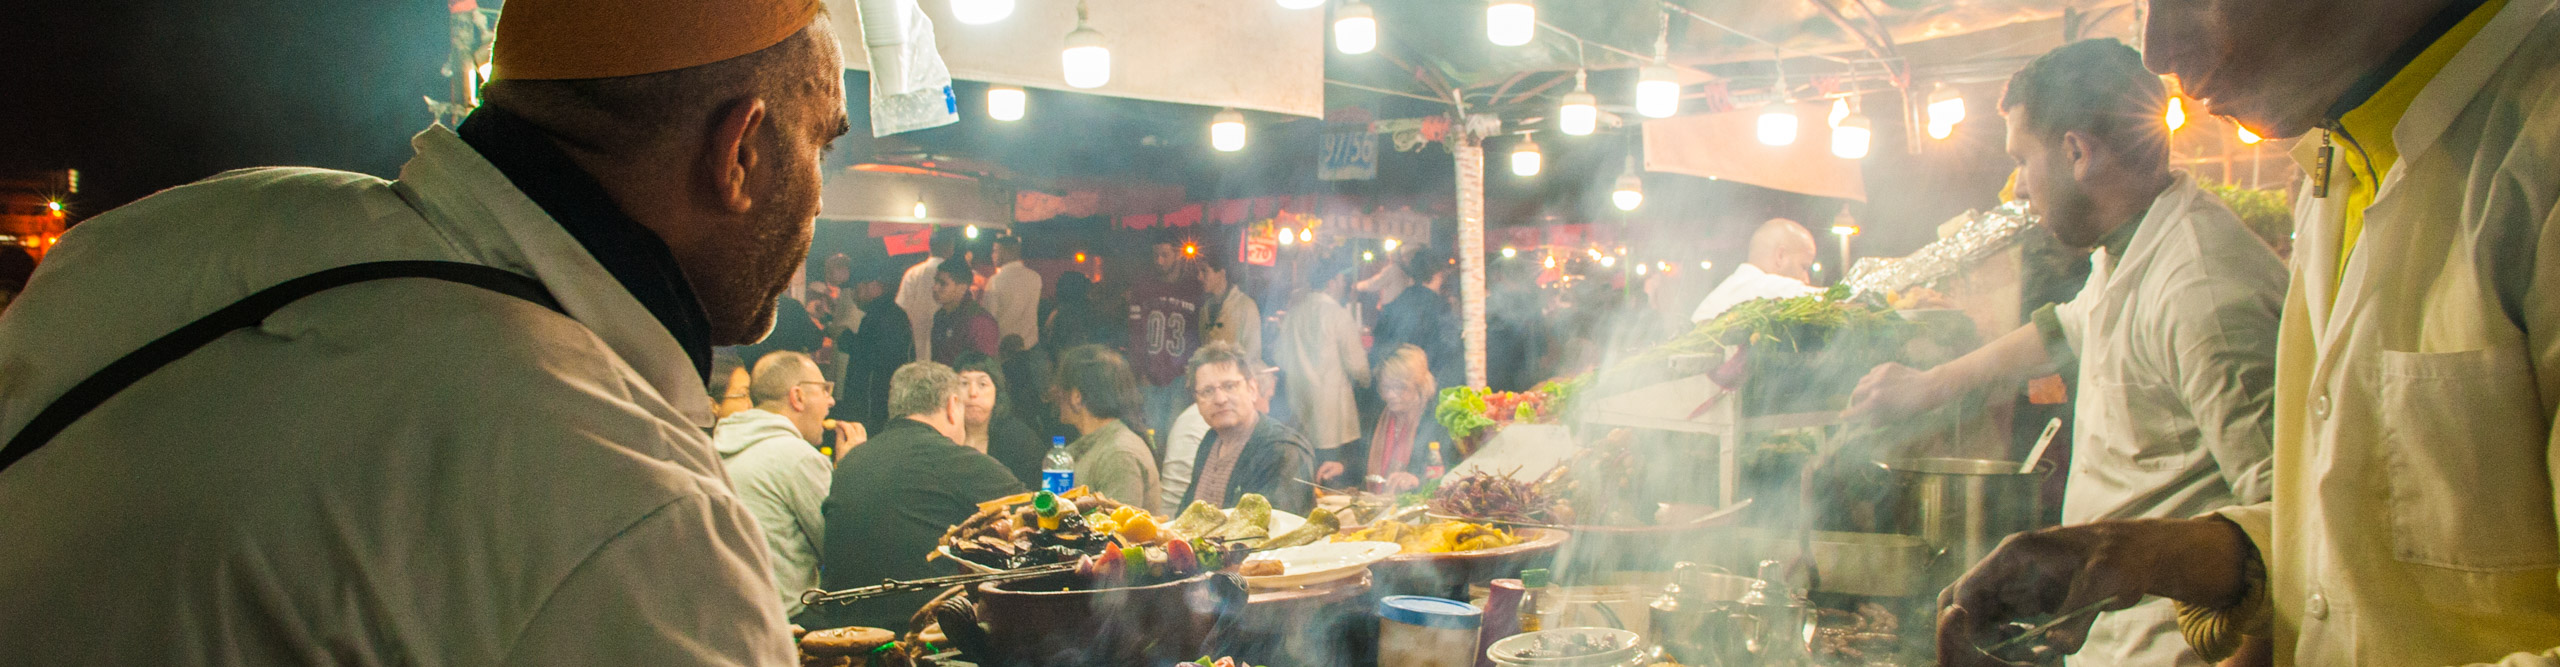 Food nights markets in Marrakech, Morocco 